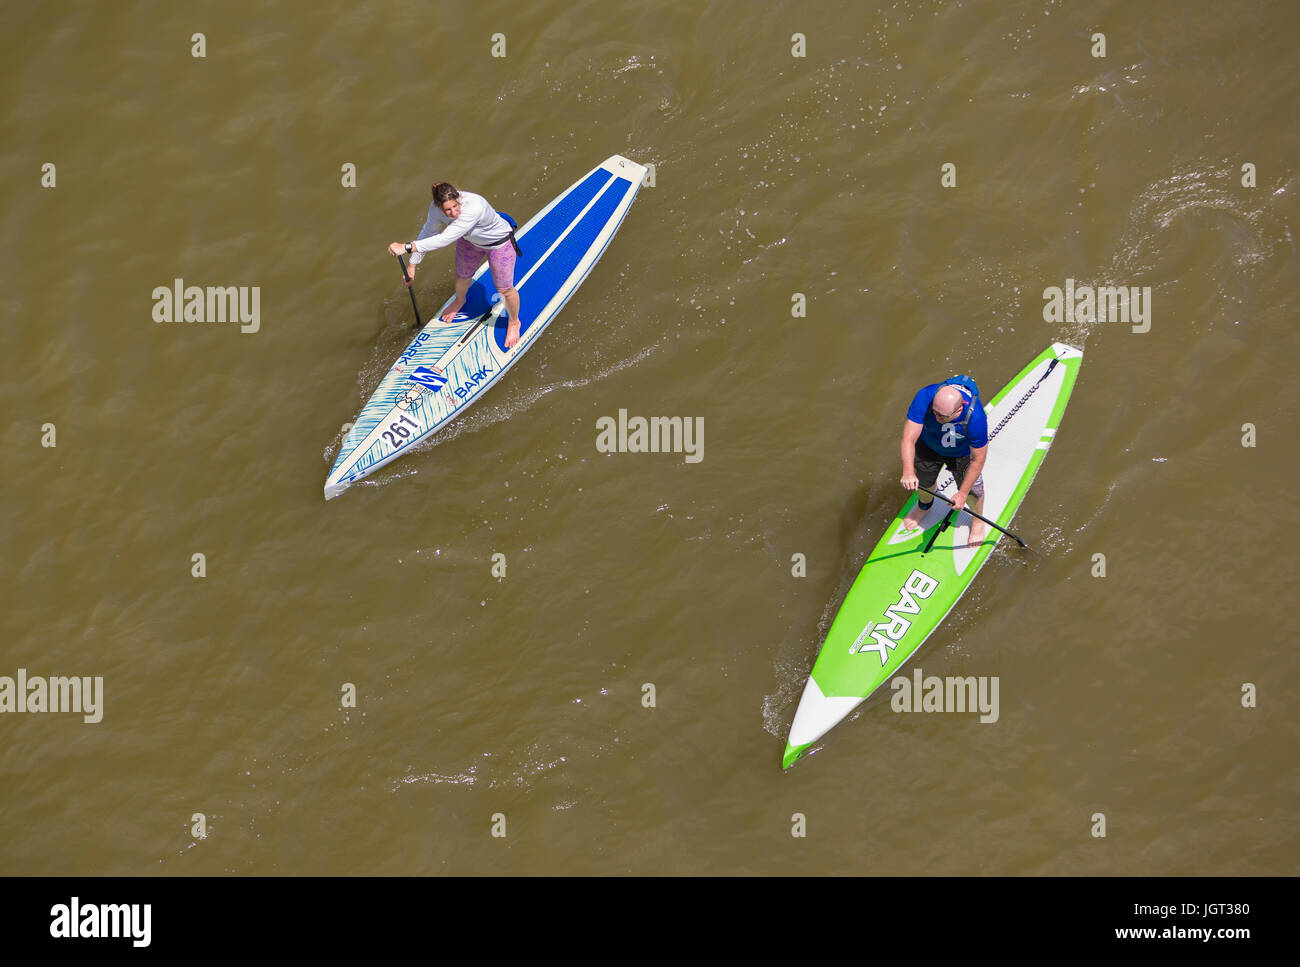 WASHINGTON, DC, Stati Uniti d'America - due persone paddling loro paddleboards sul Fiume Potomac. Foto Stock